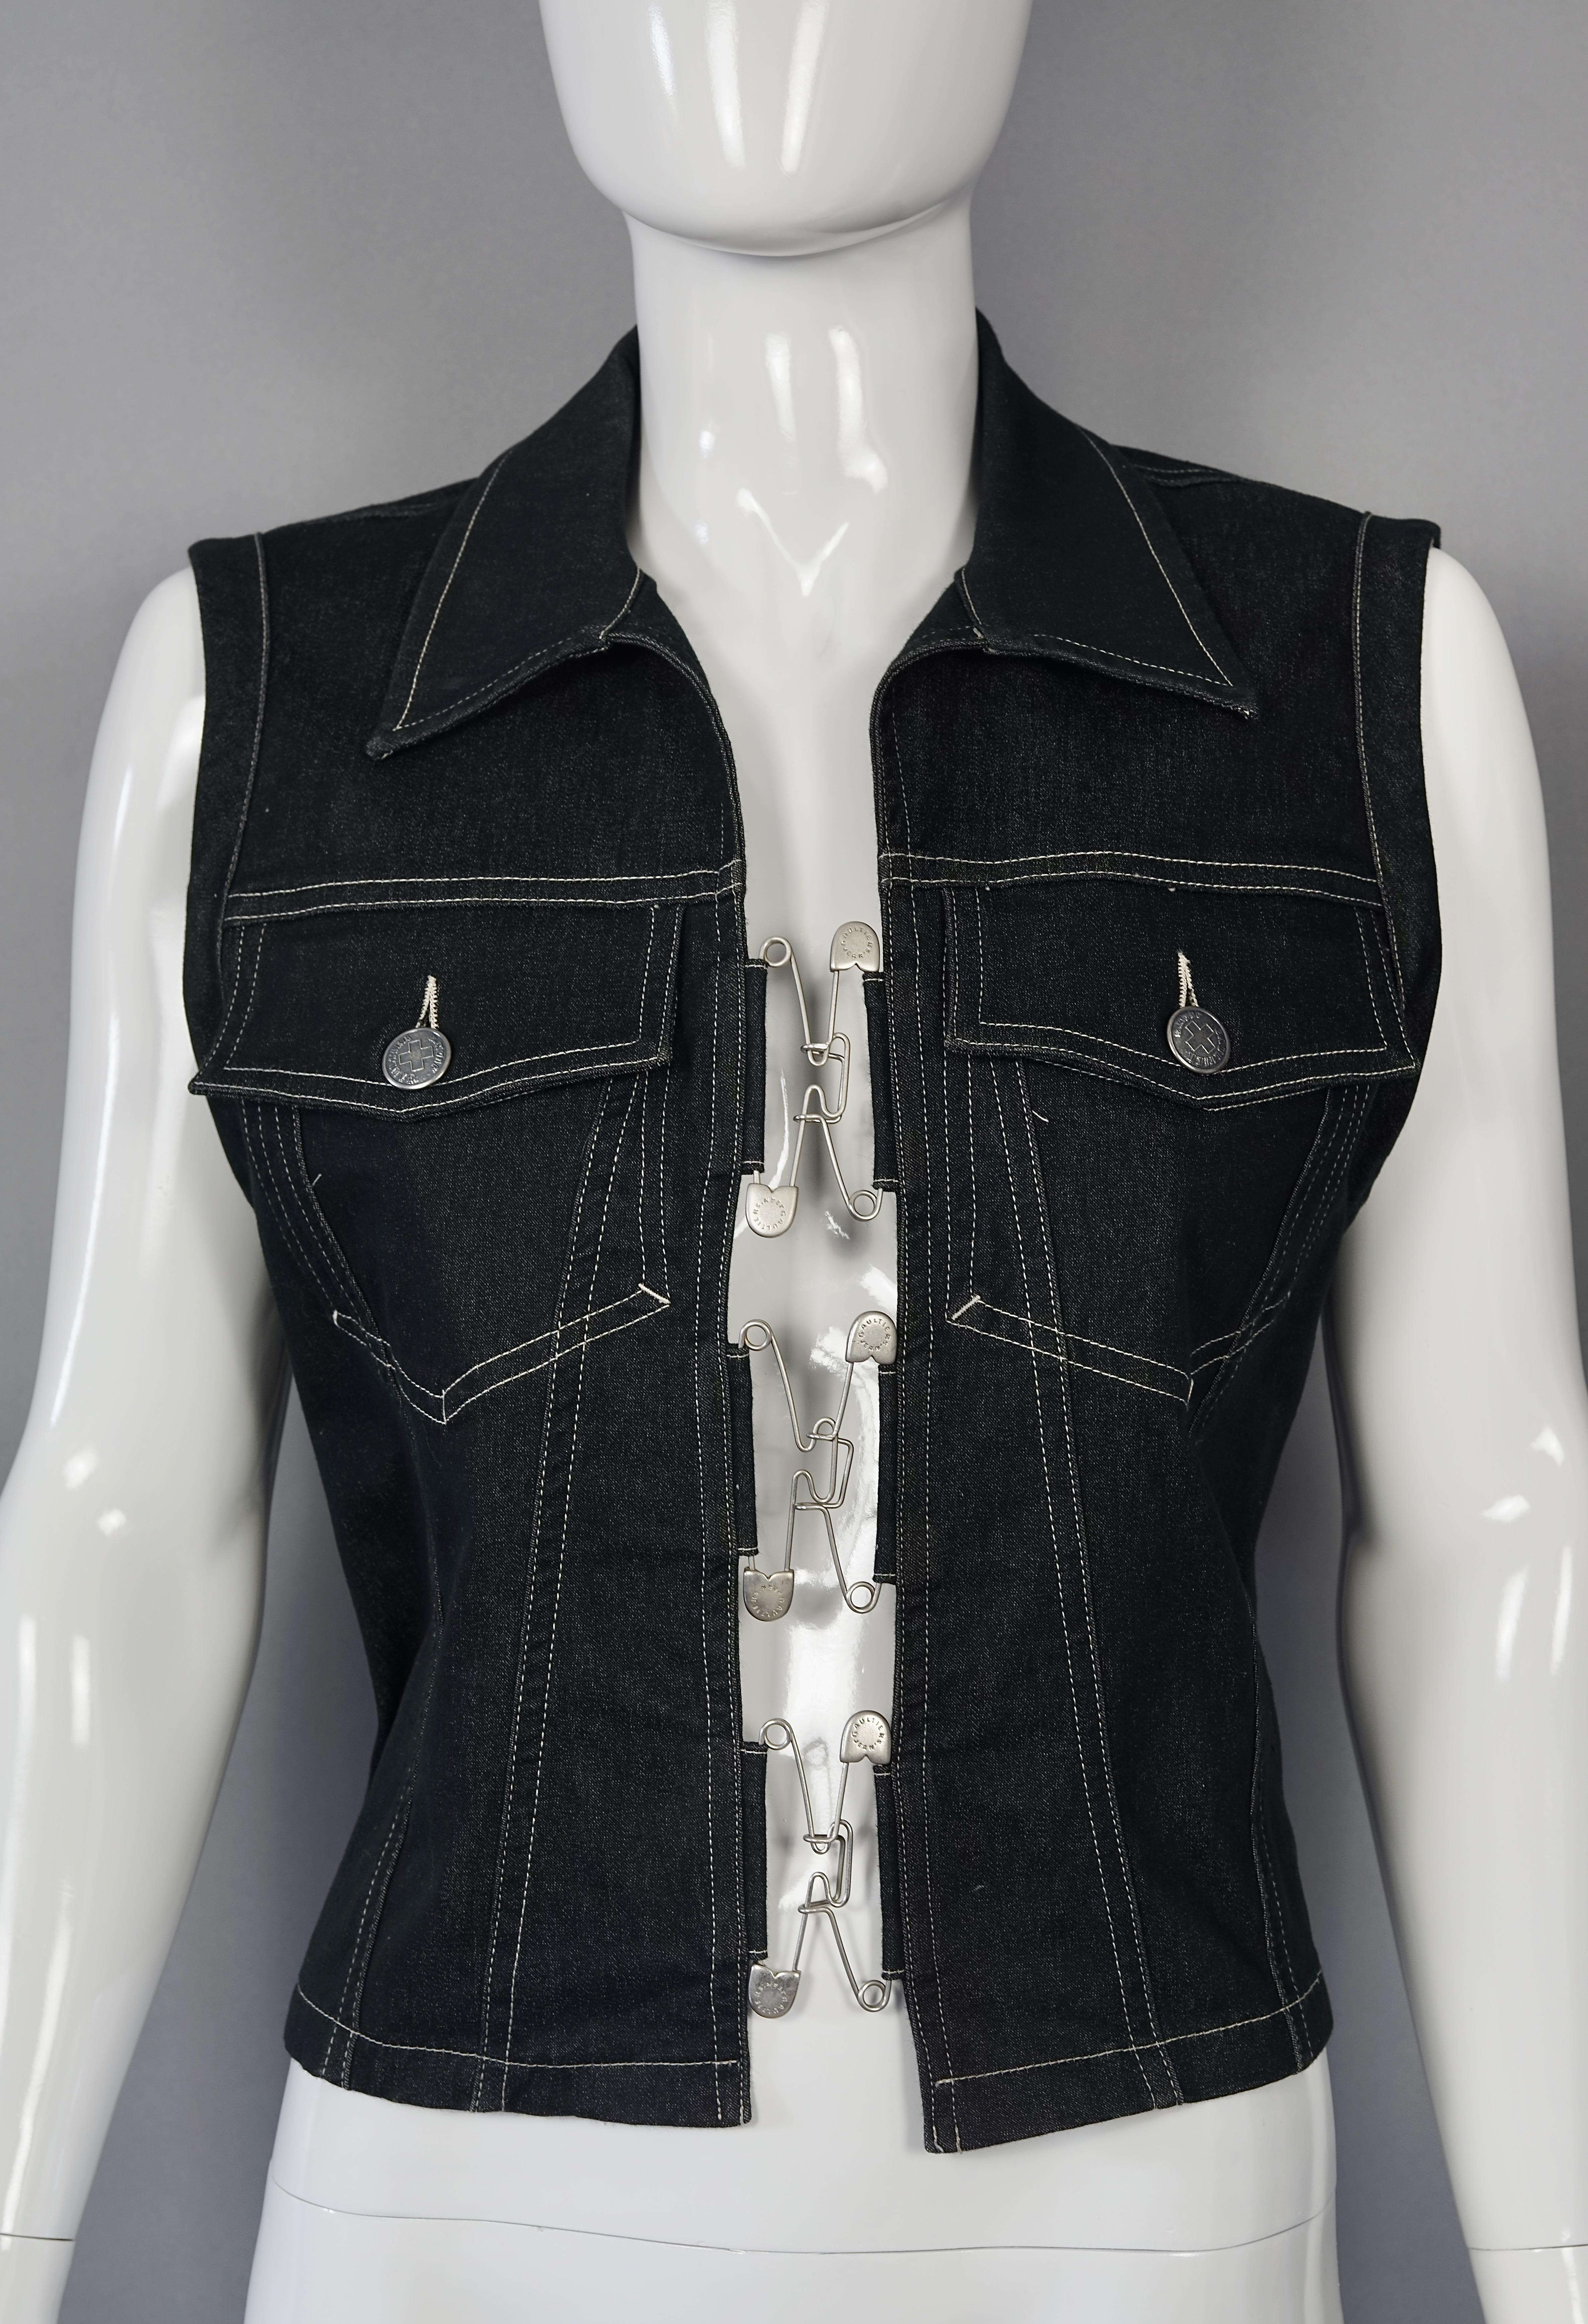 Vintage JEAN PAUL GAULTIER Safety Pin Denim Vest Jacket

Measurements taken laid flat, please double bust and waist:
Shoulder: 15.35 inches (39 cm)
Bust: 18.50 inches (47 cm)
Waist: 16.92 inches (43 cm)
Length: 21.25 inches (54 cm)

Features:
- 100%